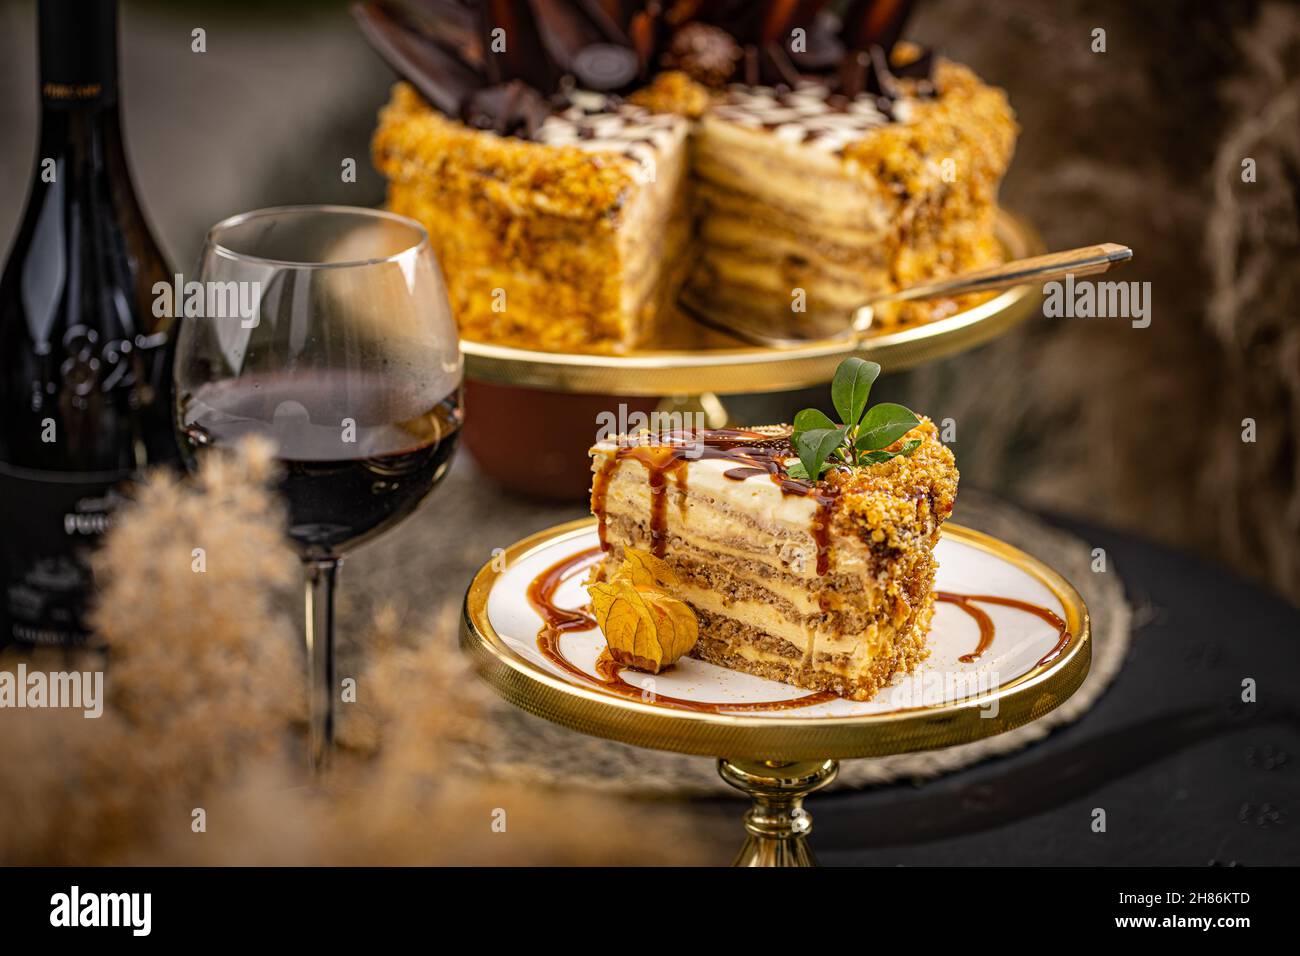 Slice of layered walnut cake served with a glass of wine Stock Photo